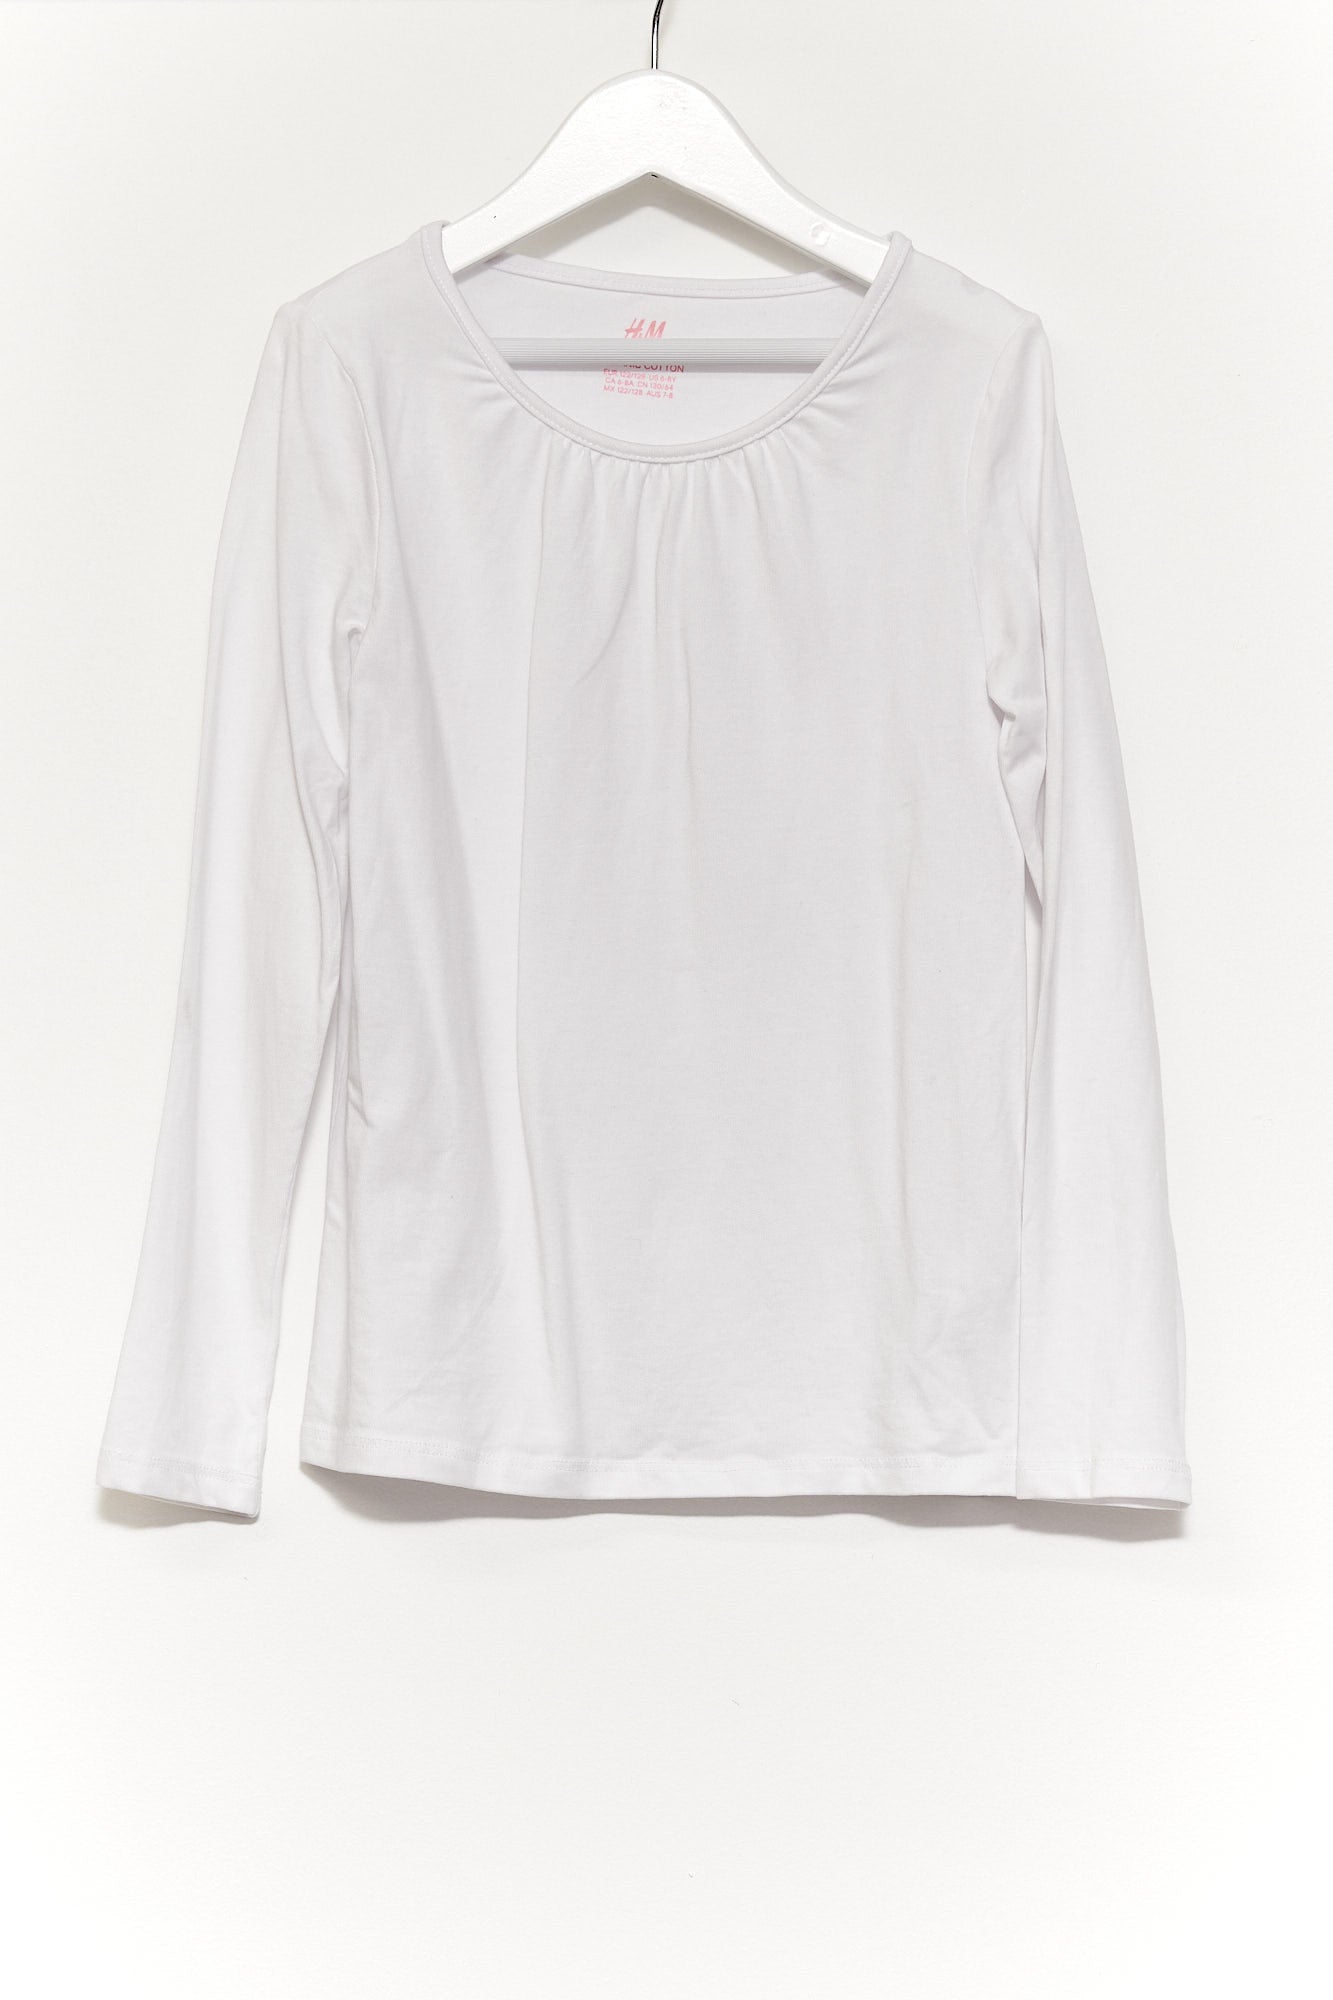 Kids H&M White Long Sleeve T-shirt age 6-8